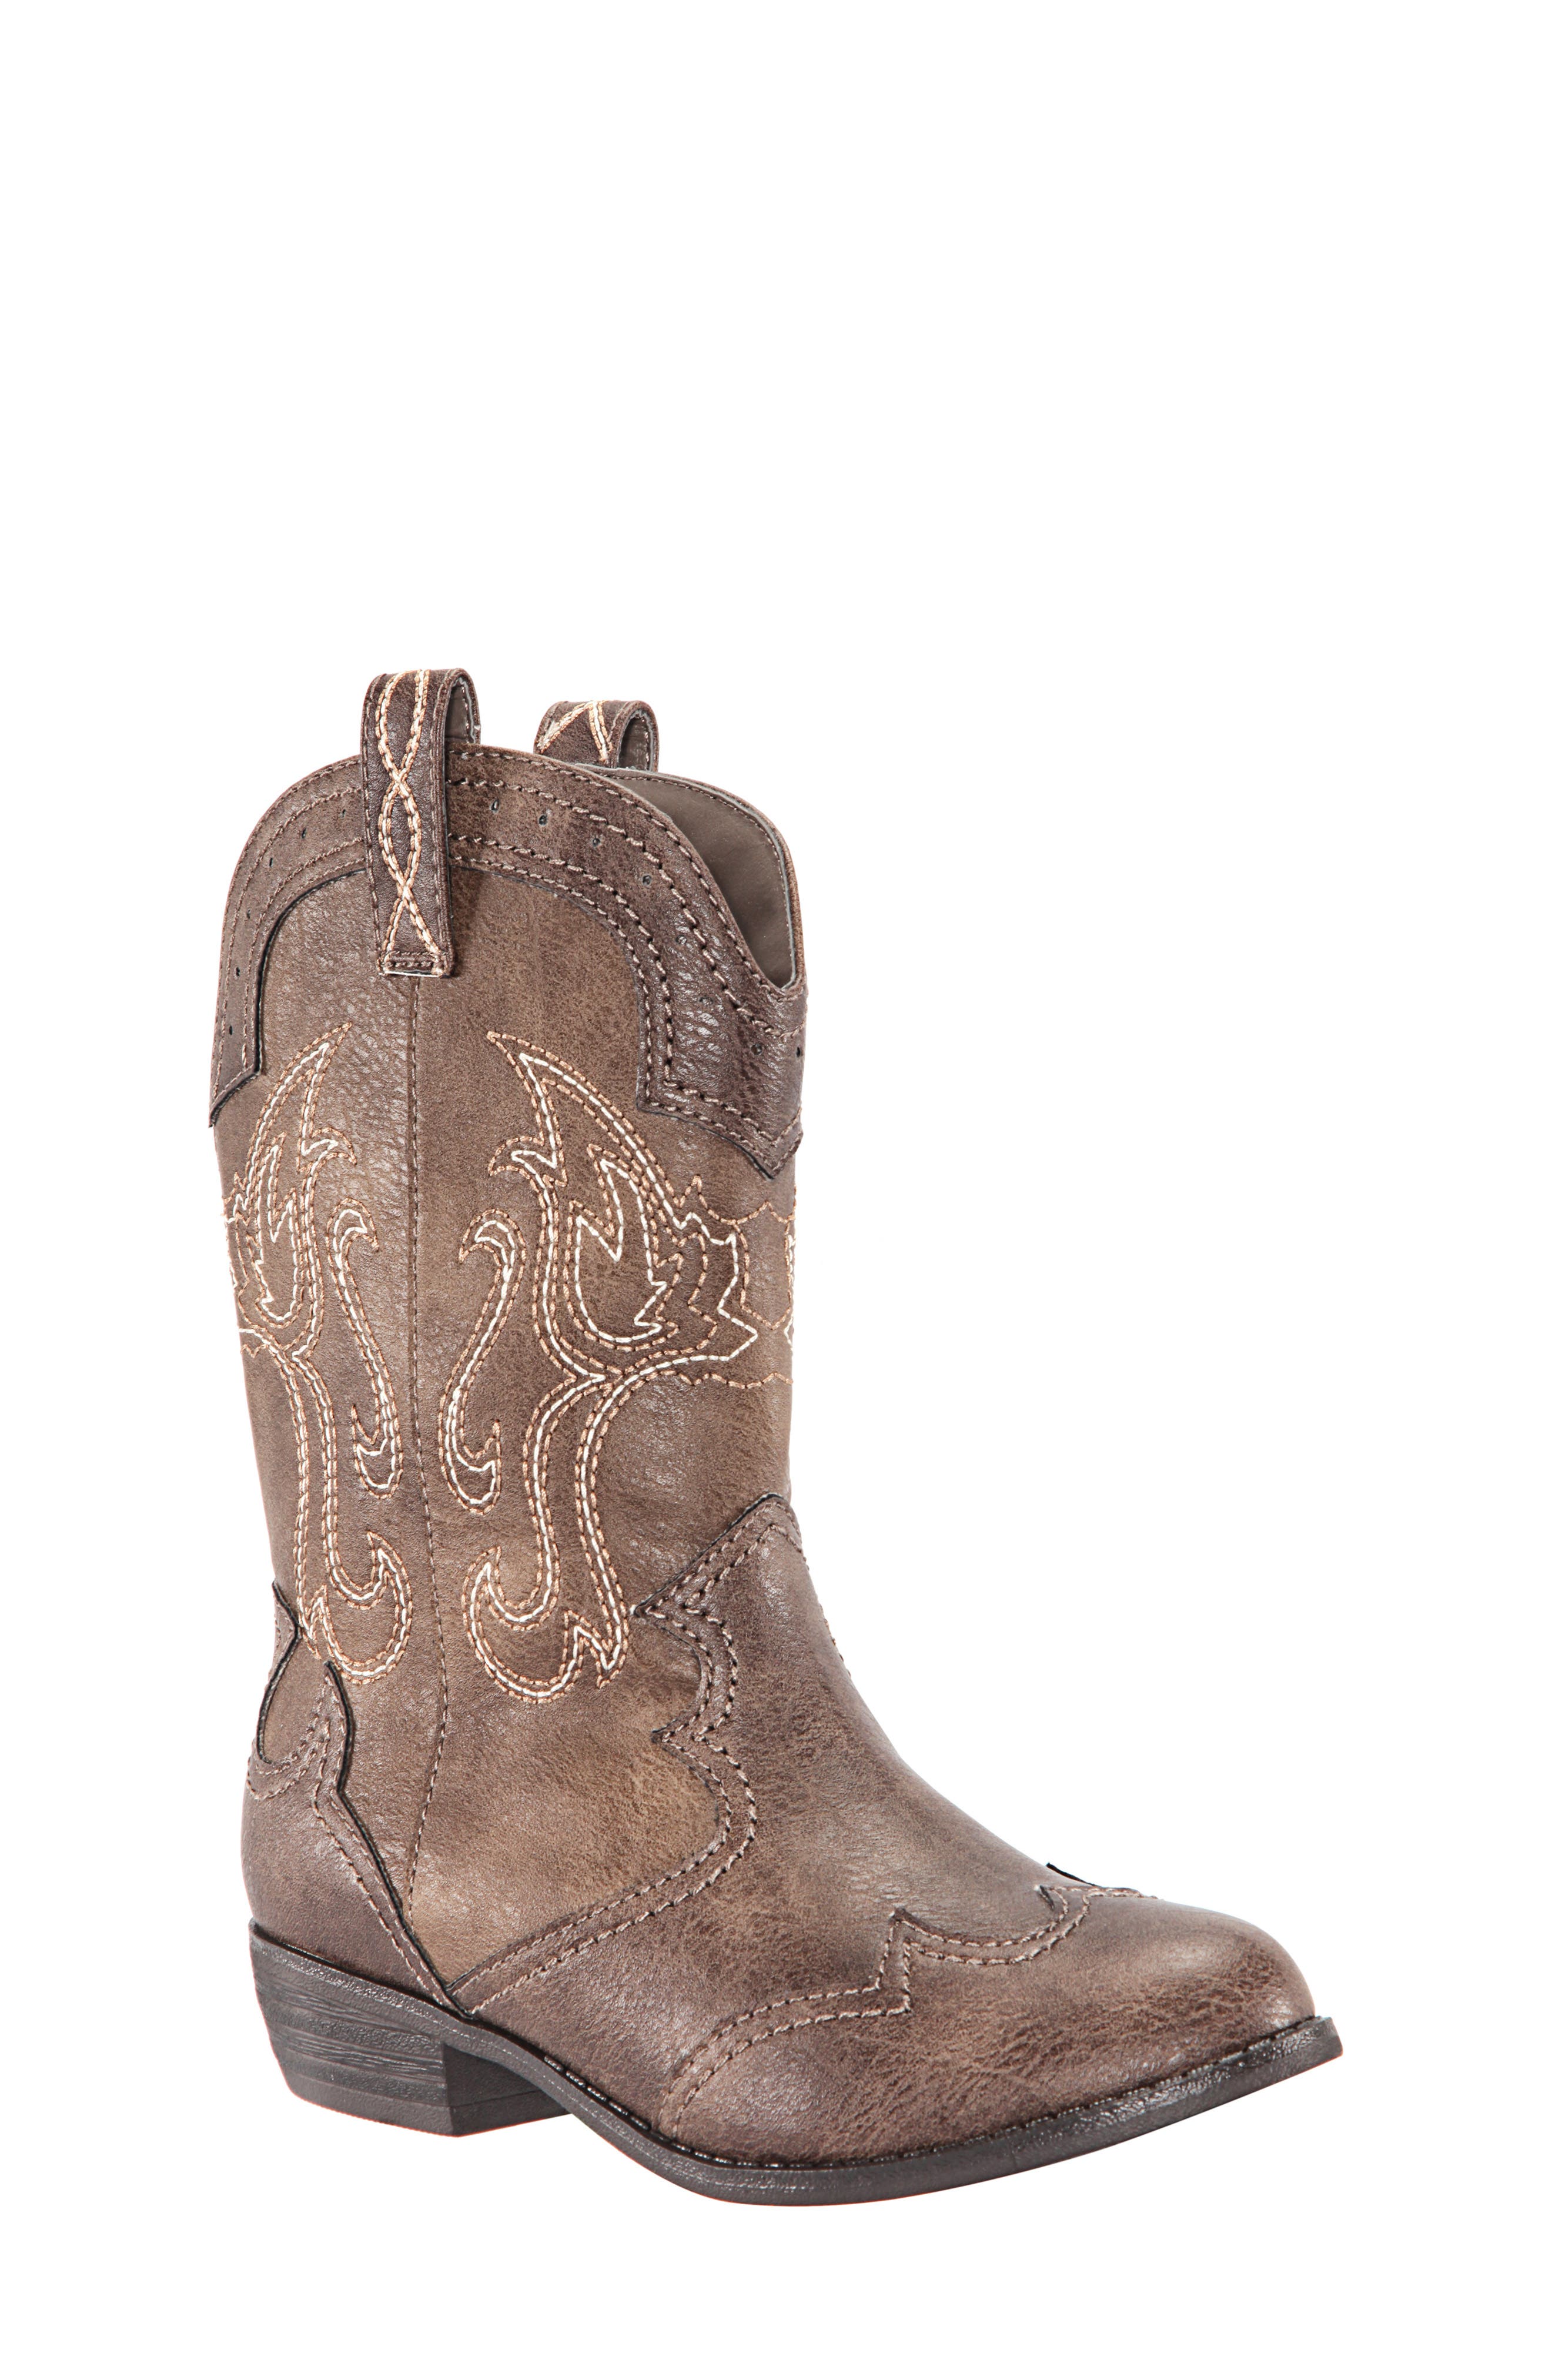 UPC 794378367772 product image for Girl's Nina Beti Western Boot, Size 3 M - Brown | upcitemdb.com